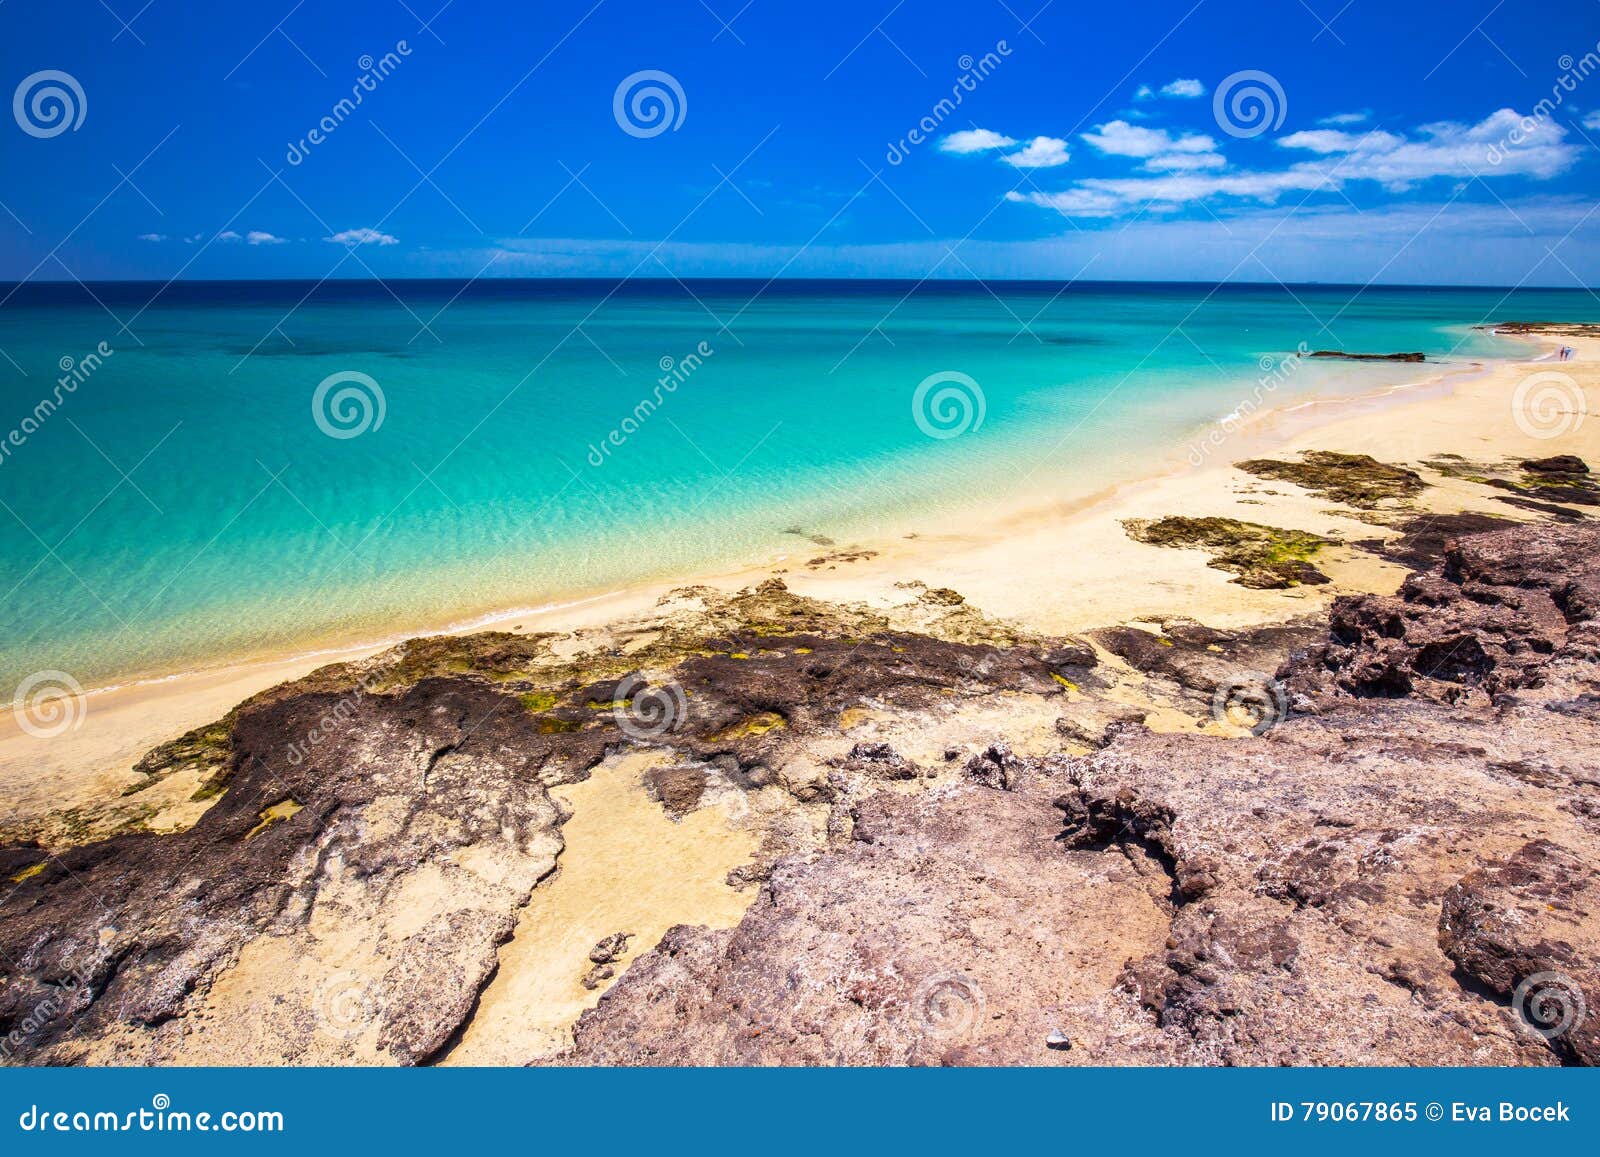 costa calma sandy beach with vulcanic mountains in the background, jandia, fuerteventura island, canary islands, spain.